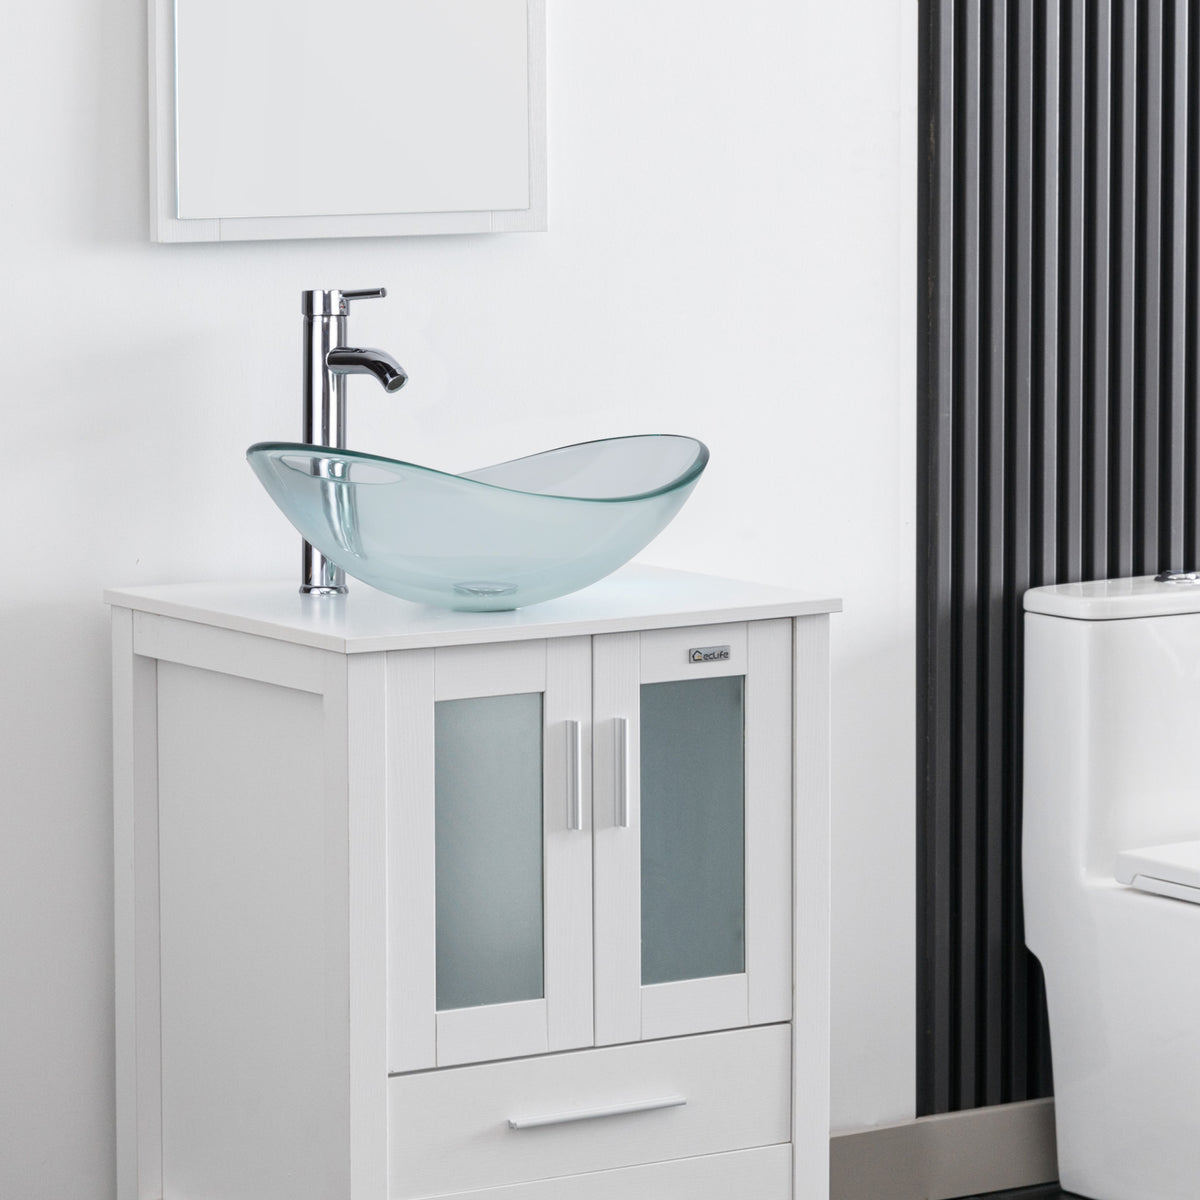 Eclife 21.5" Bathroom Modern Artistic Tempered Glass Basin Countertop Bowl Sink